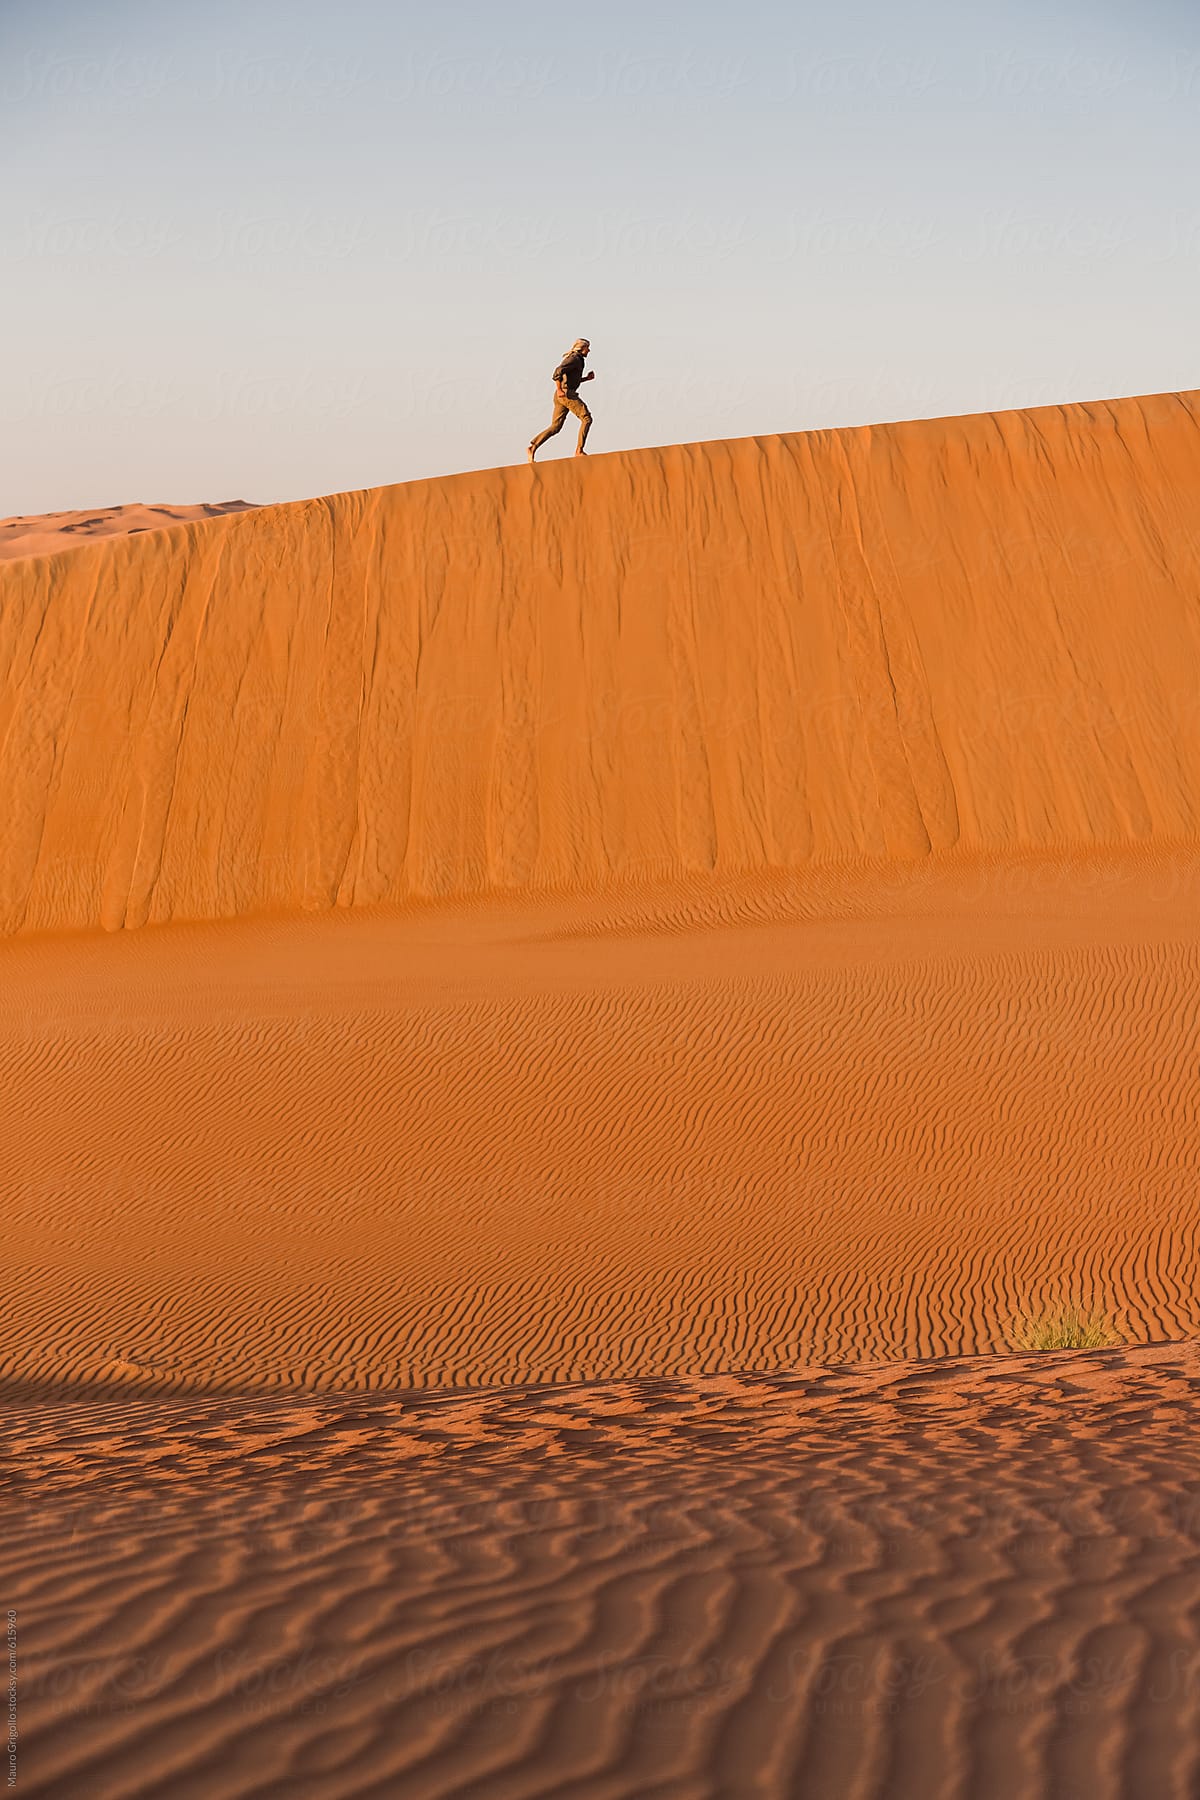 A man walks on a sand dune